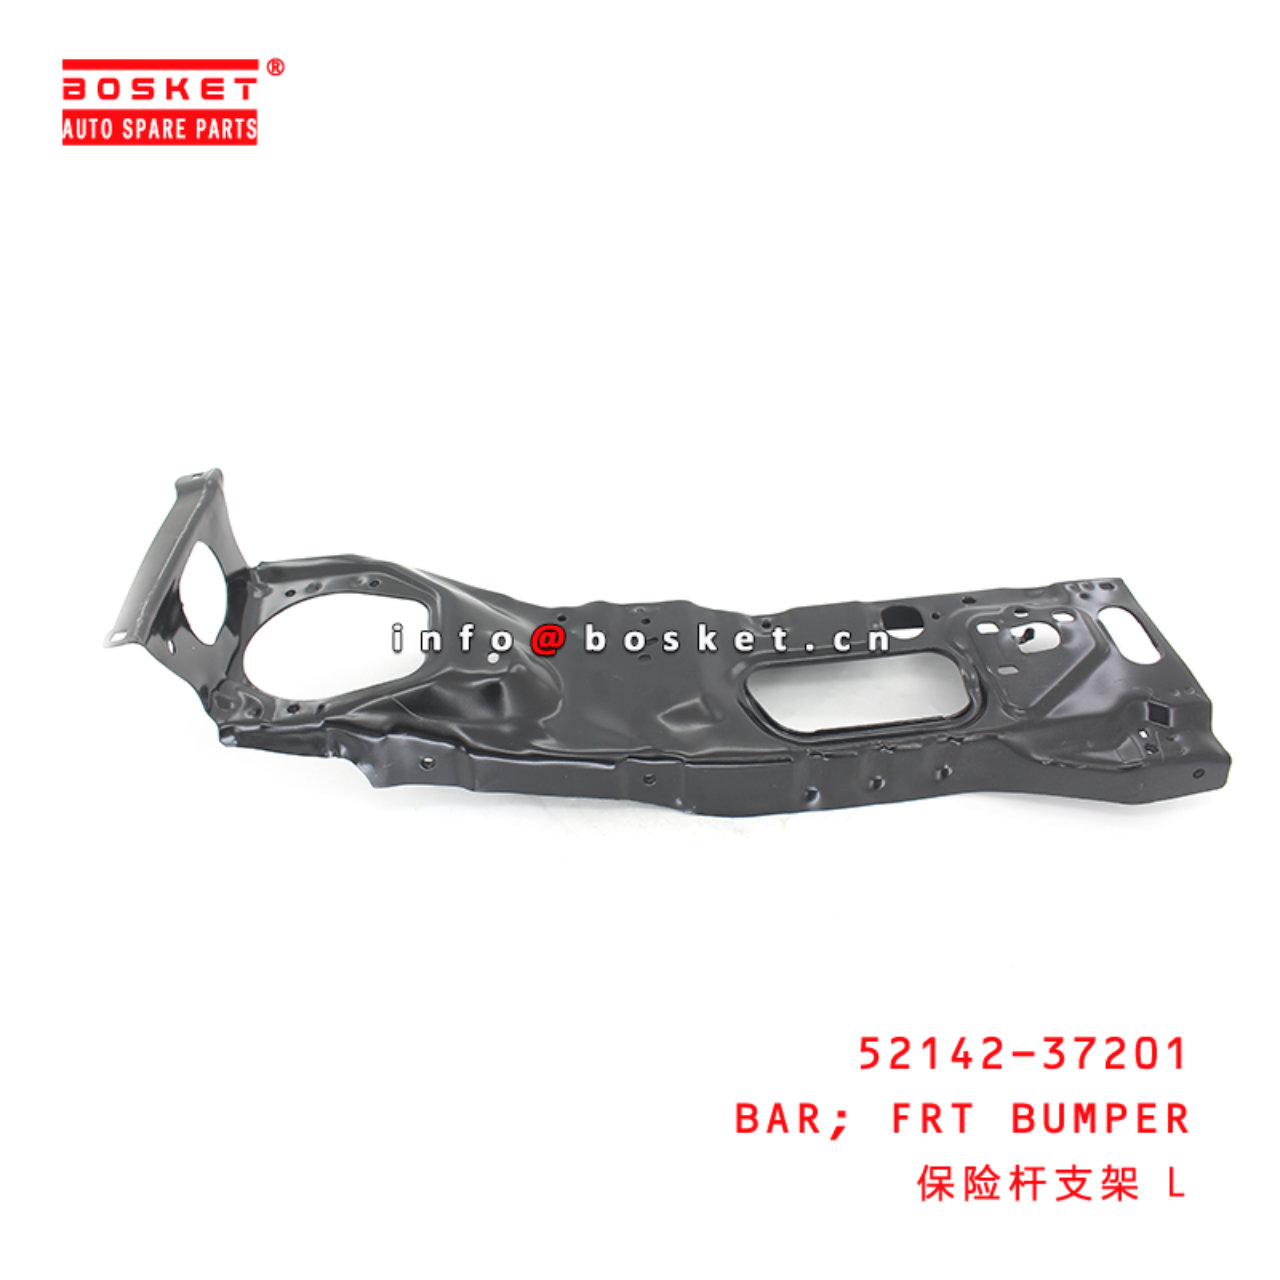 52142-37201 Front Bumper Bar Suitable for ISUZU HINO300